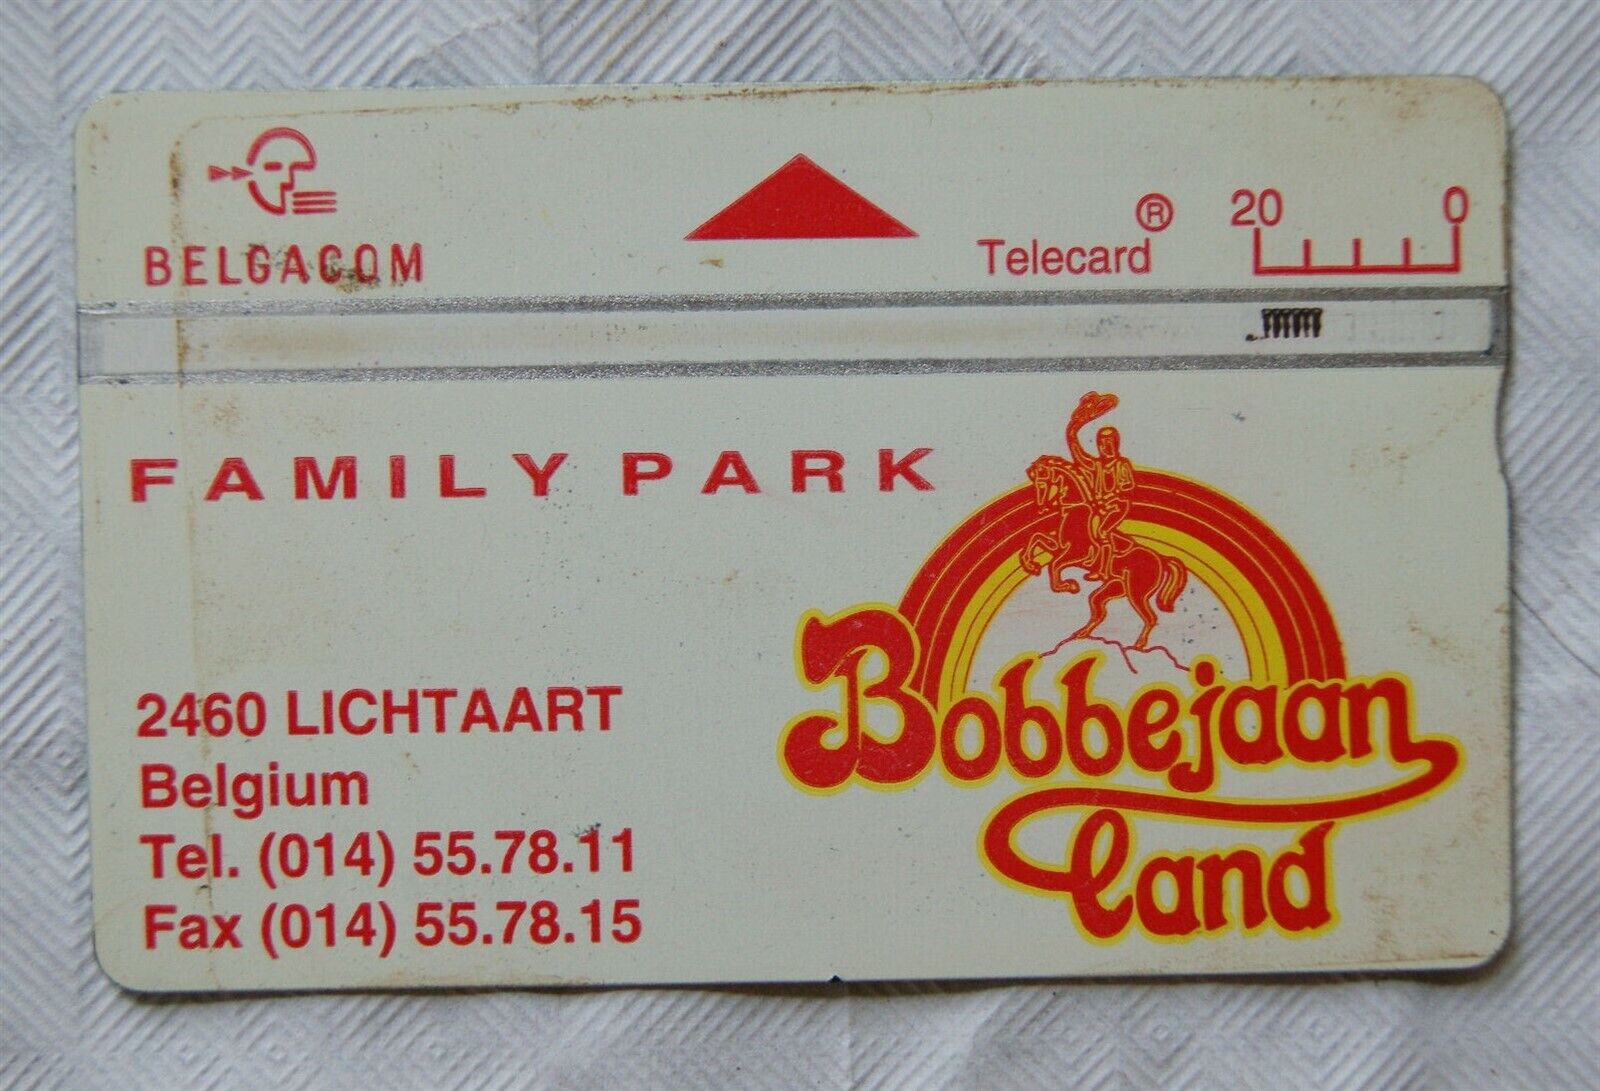 Belgium Phone Card - Bobbyjaanland Family Park